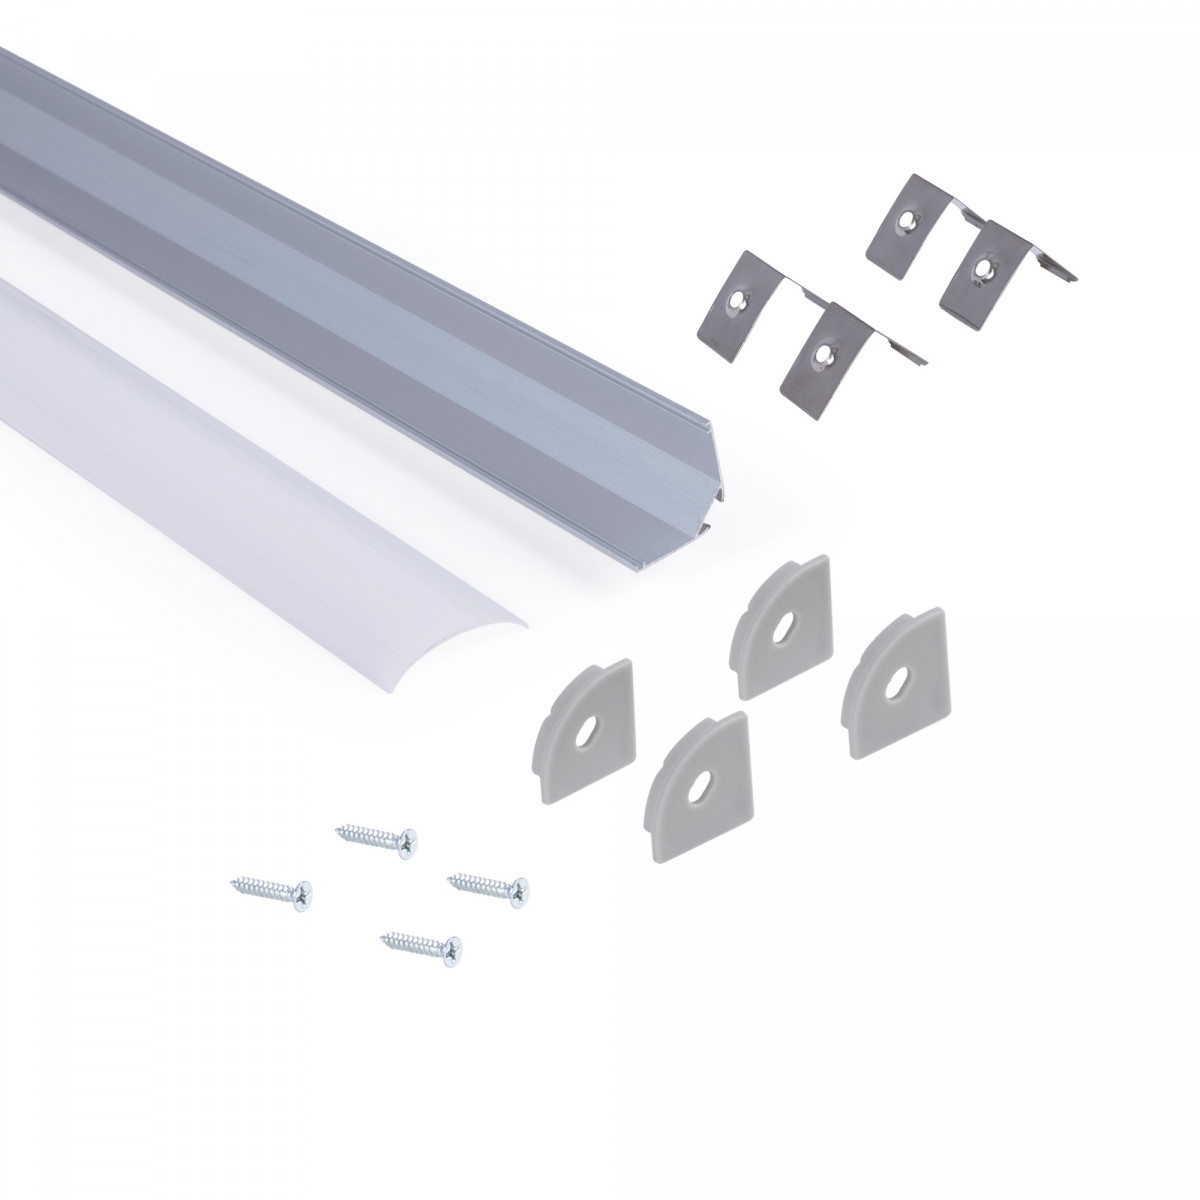 Alu Eckprofil mit Diffusor - Komplettset - 20 x 20mm - LED Strip Profil Montagezubehör, Endkappen, Montageclips